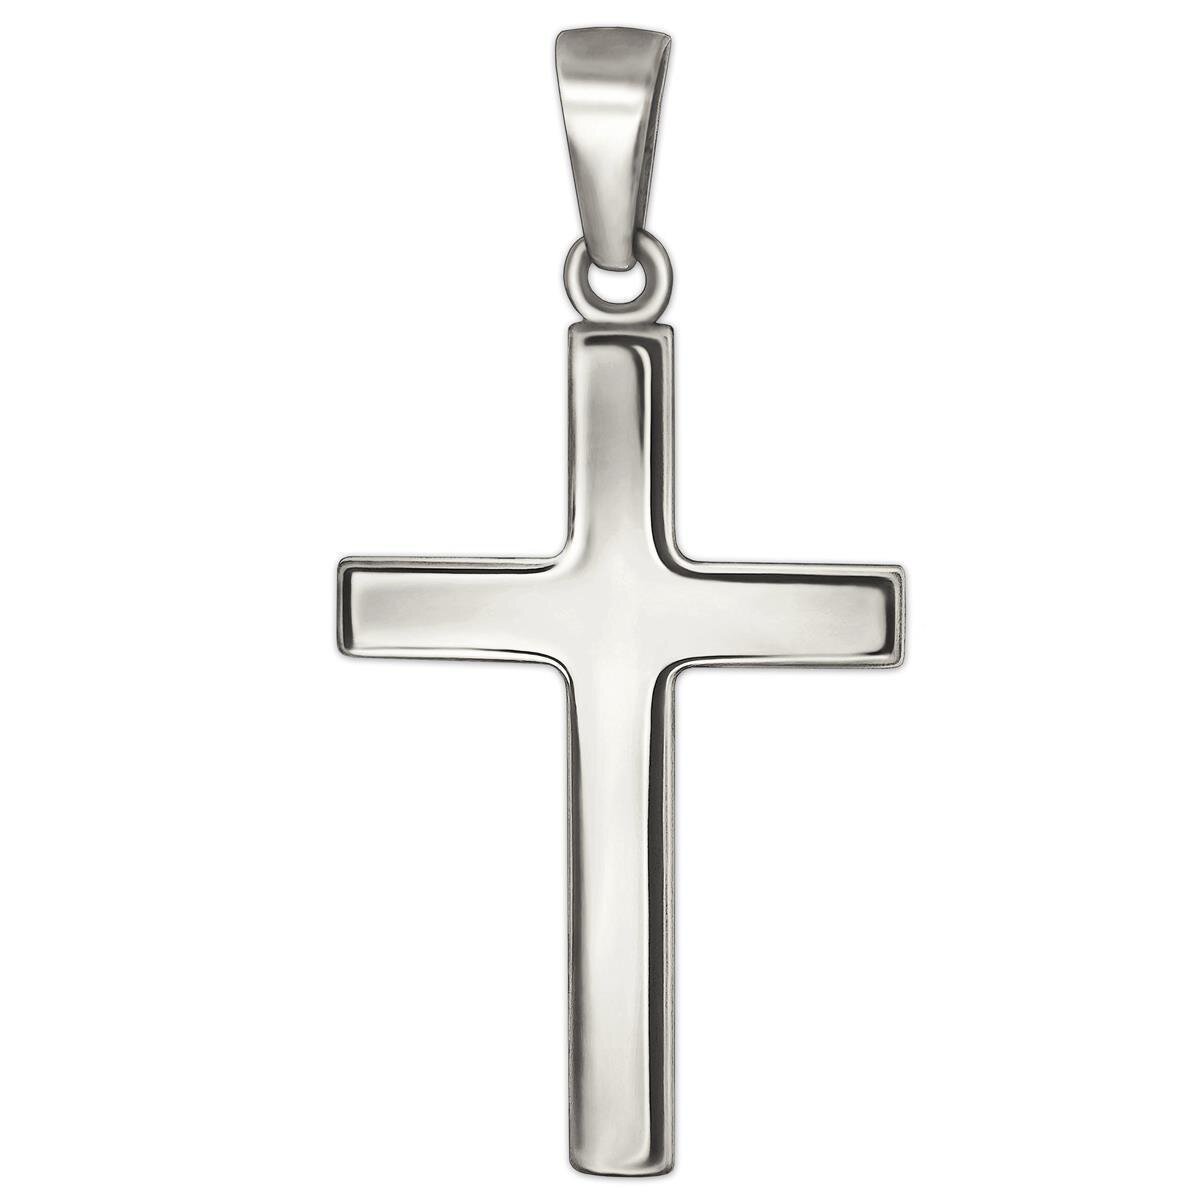 Silberner Anhänger Kreuz 18 mm schlicht glänzend Echt Silber 925